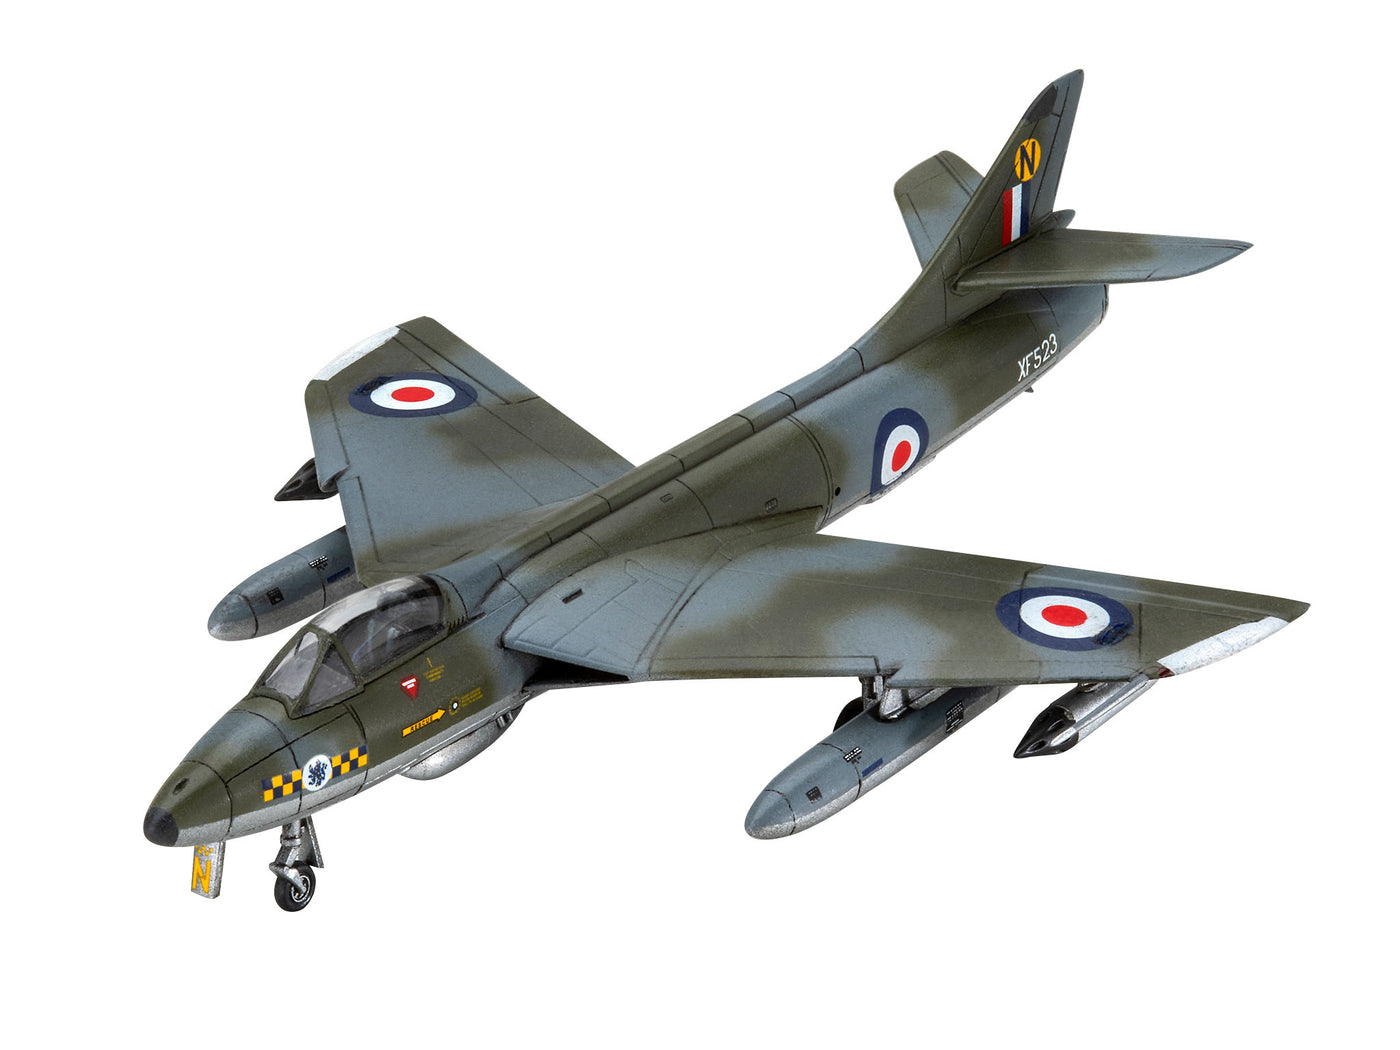 1/144 Hawker Hunter FGA.9 Starter Set